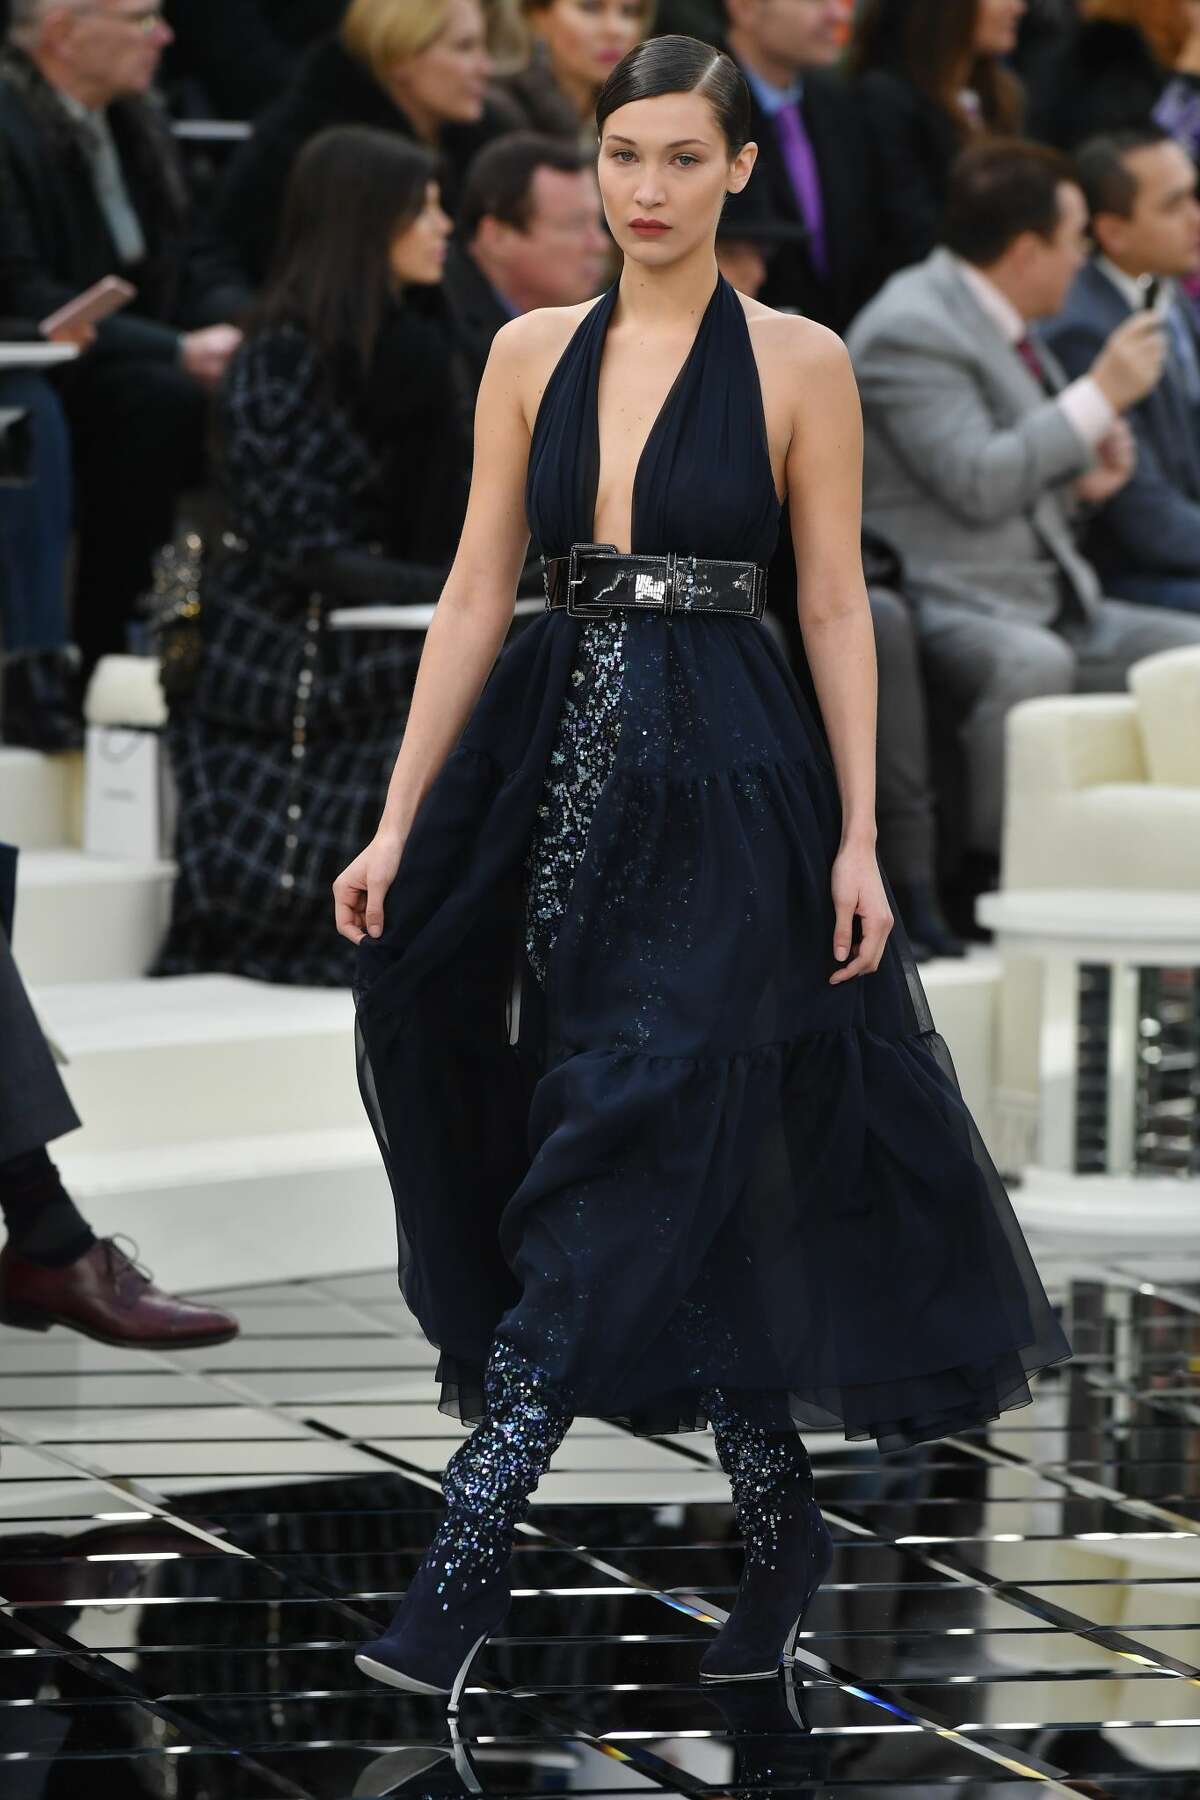 Bella Hadid's looks down the Paris Fashion Week runways